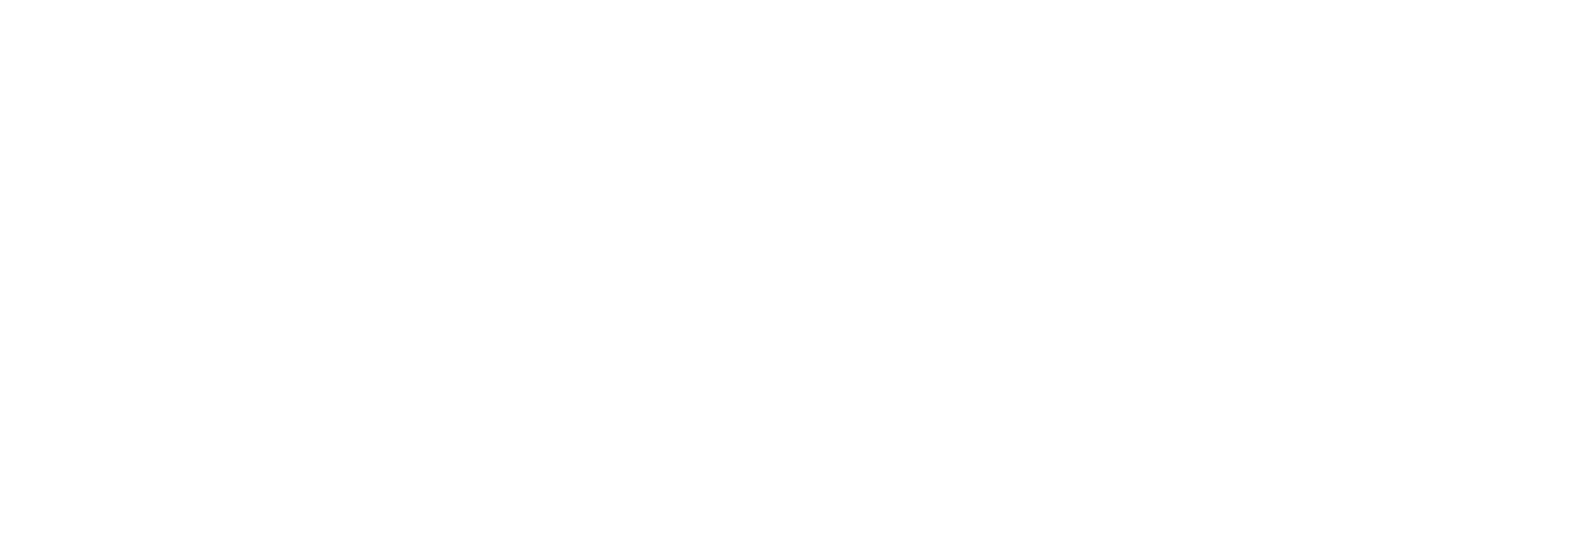 UK International Development logo